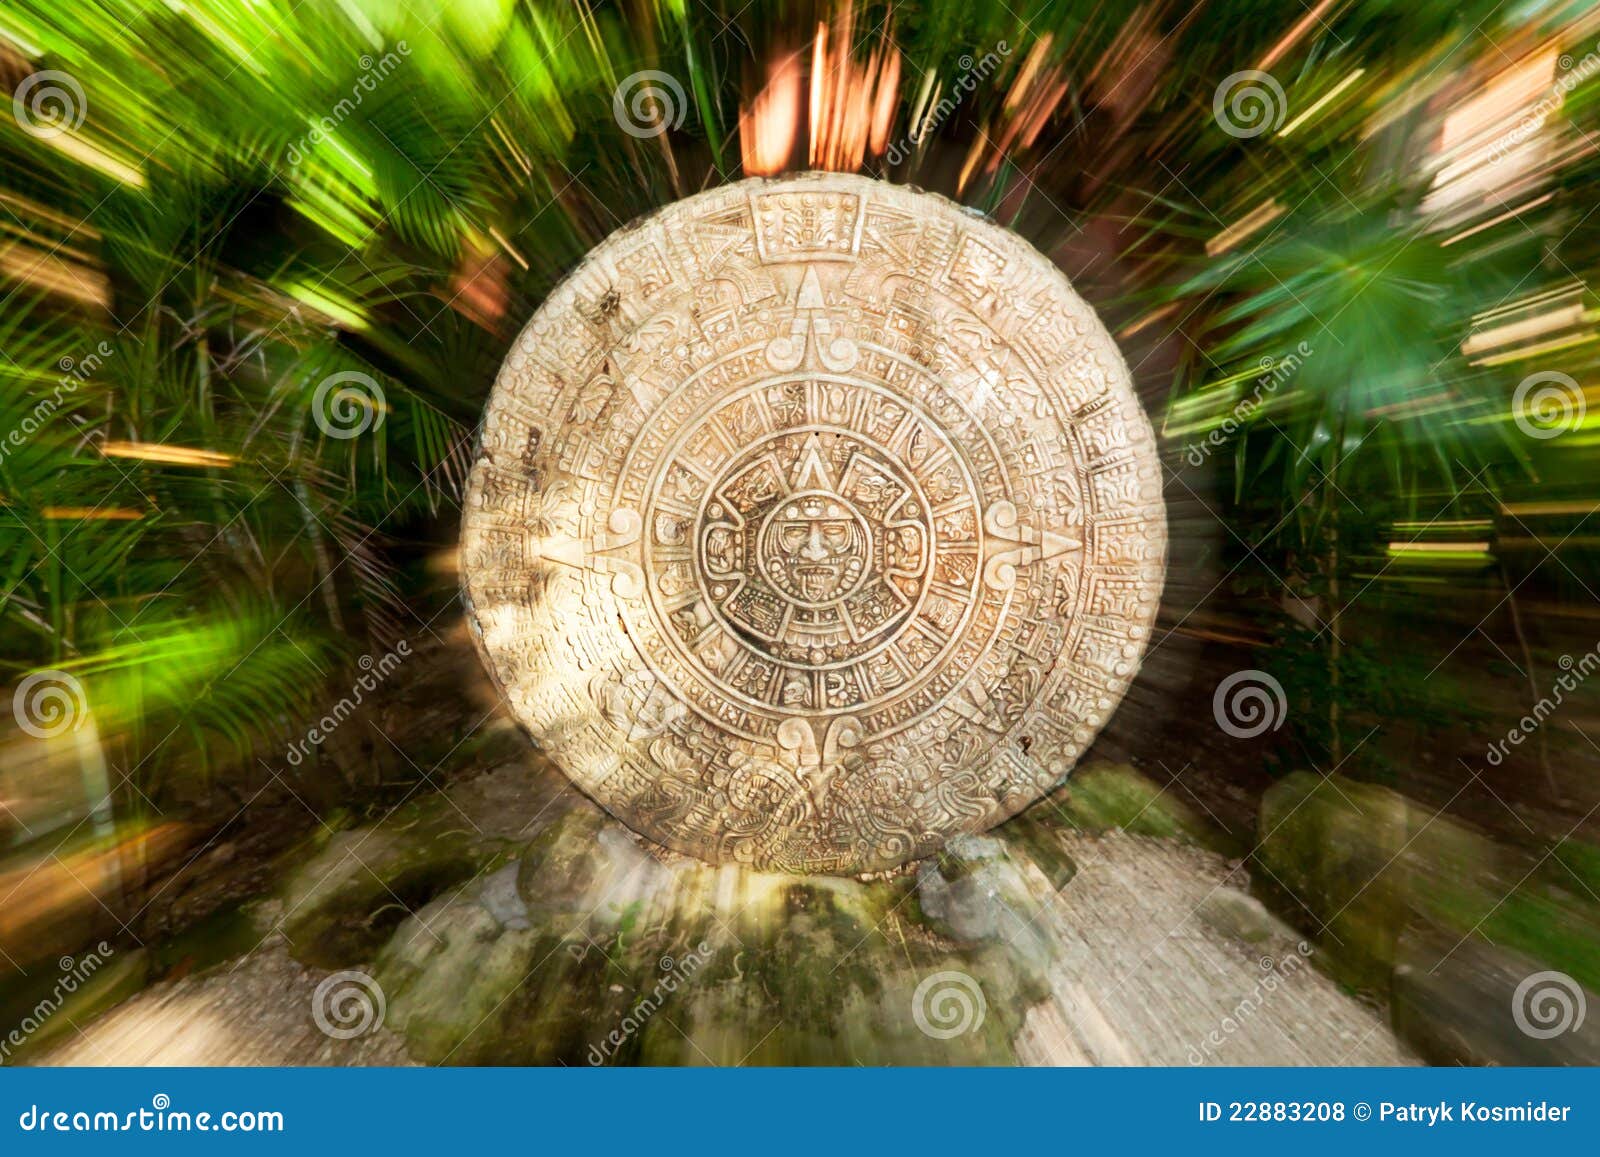 ancient mayan calendar in the jungle